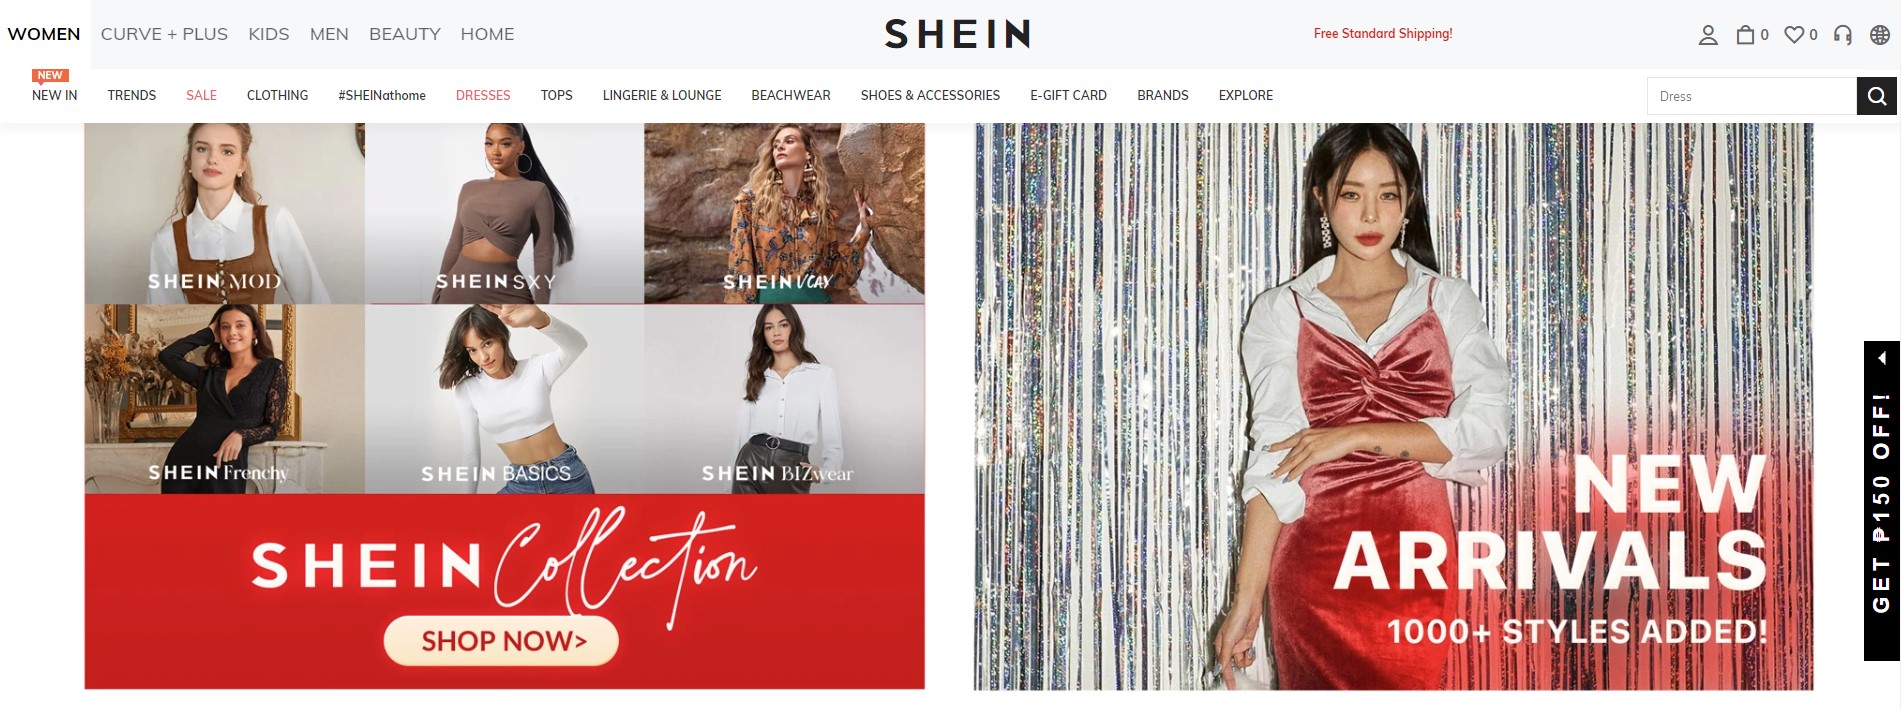 SHEIN Dress Sale Extra 15% Off